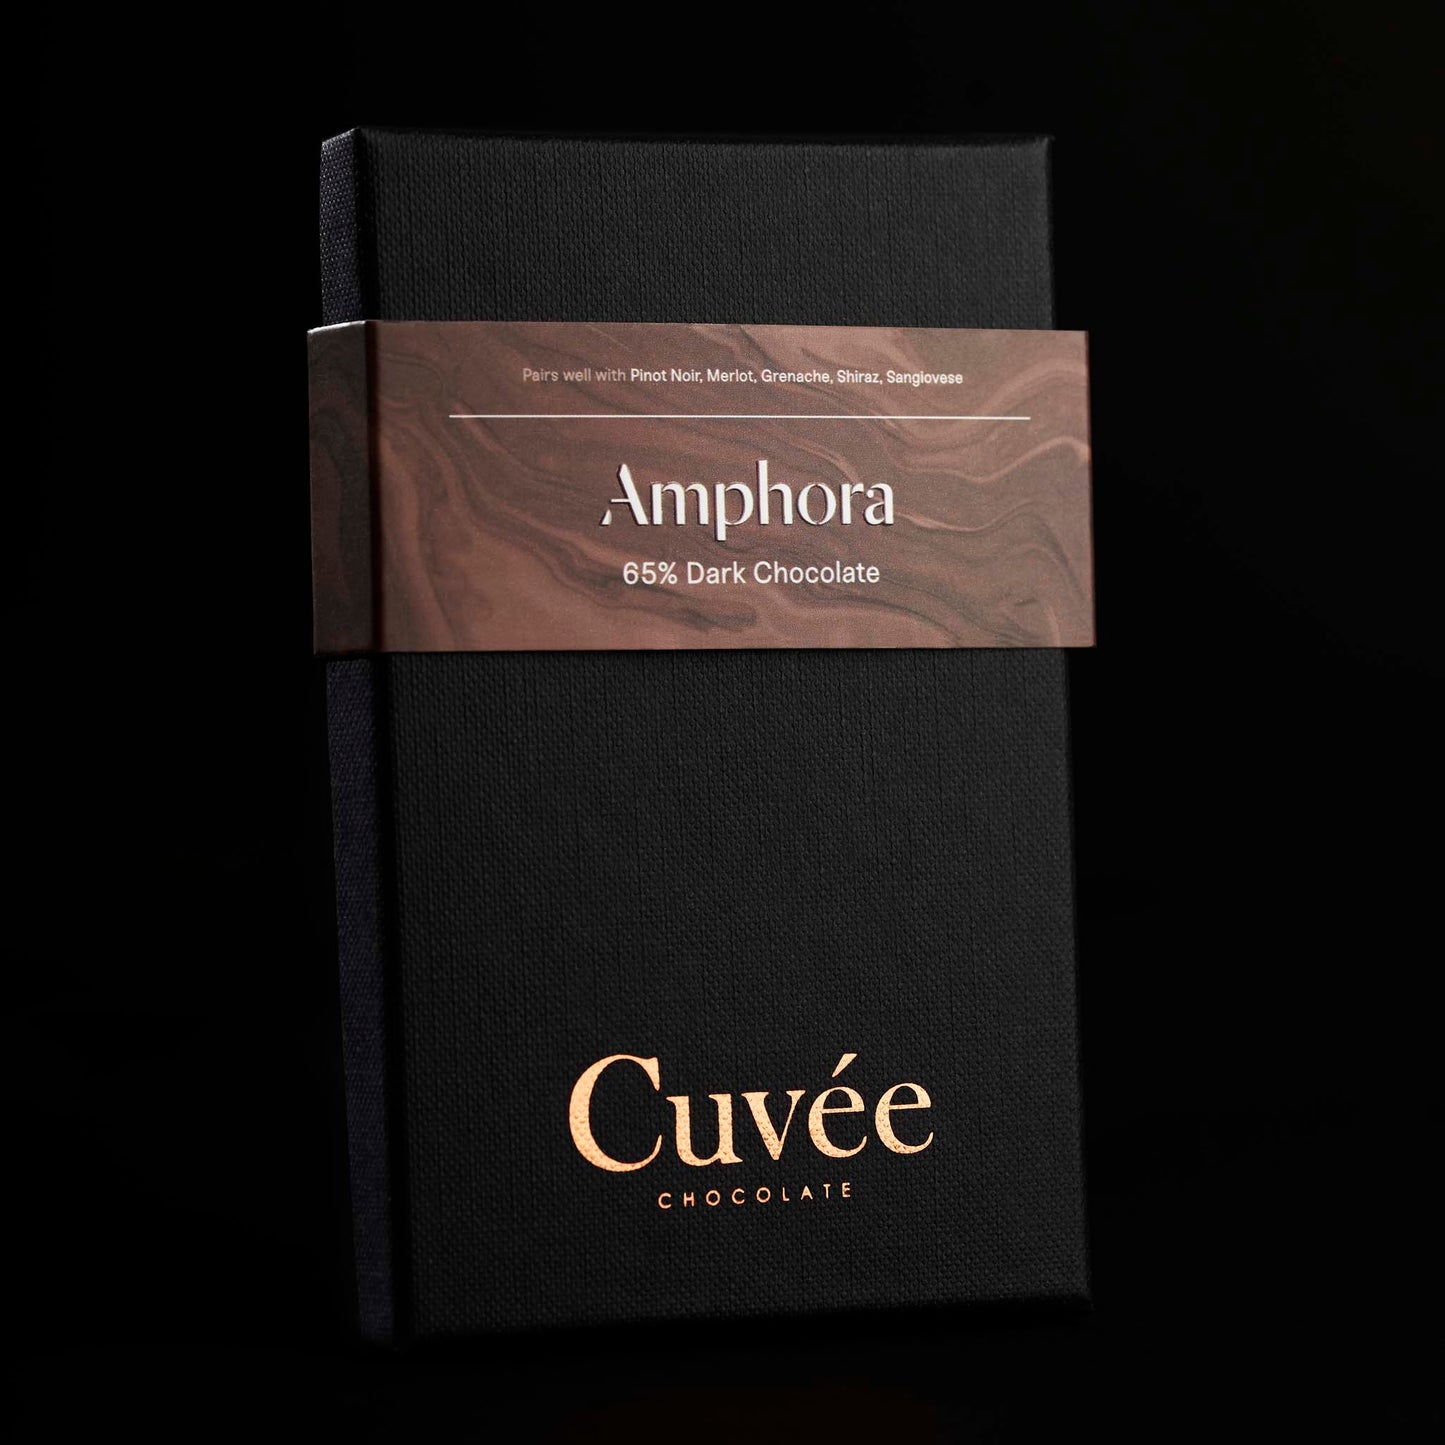 Cuvee chocolate - Amphora